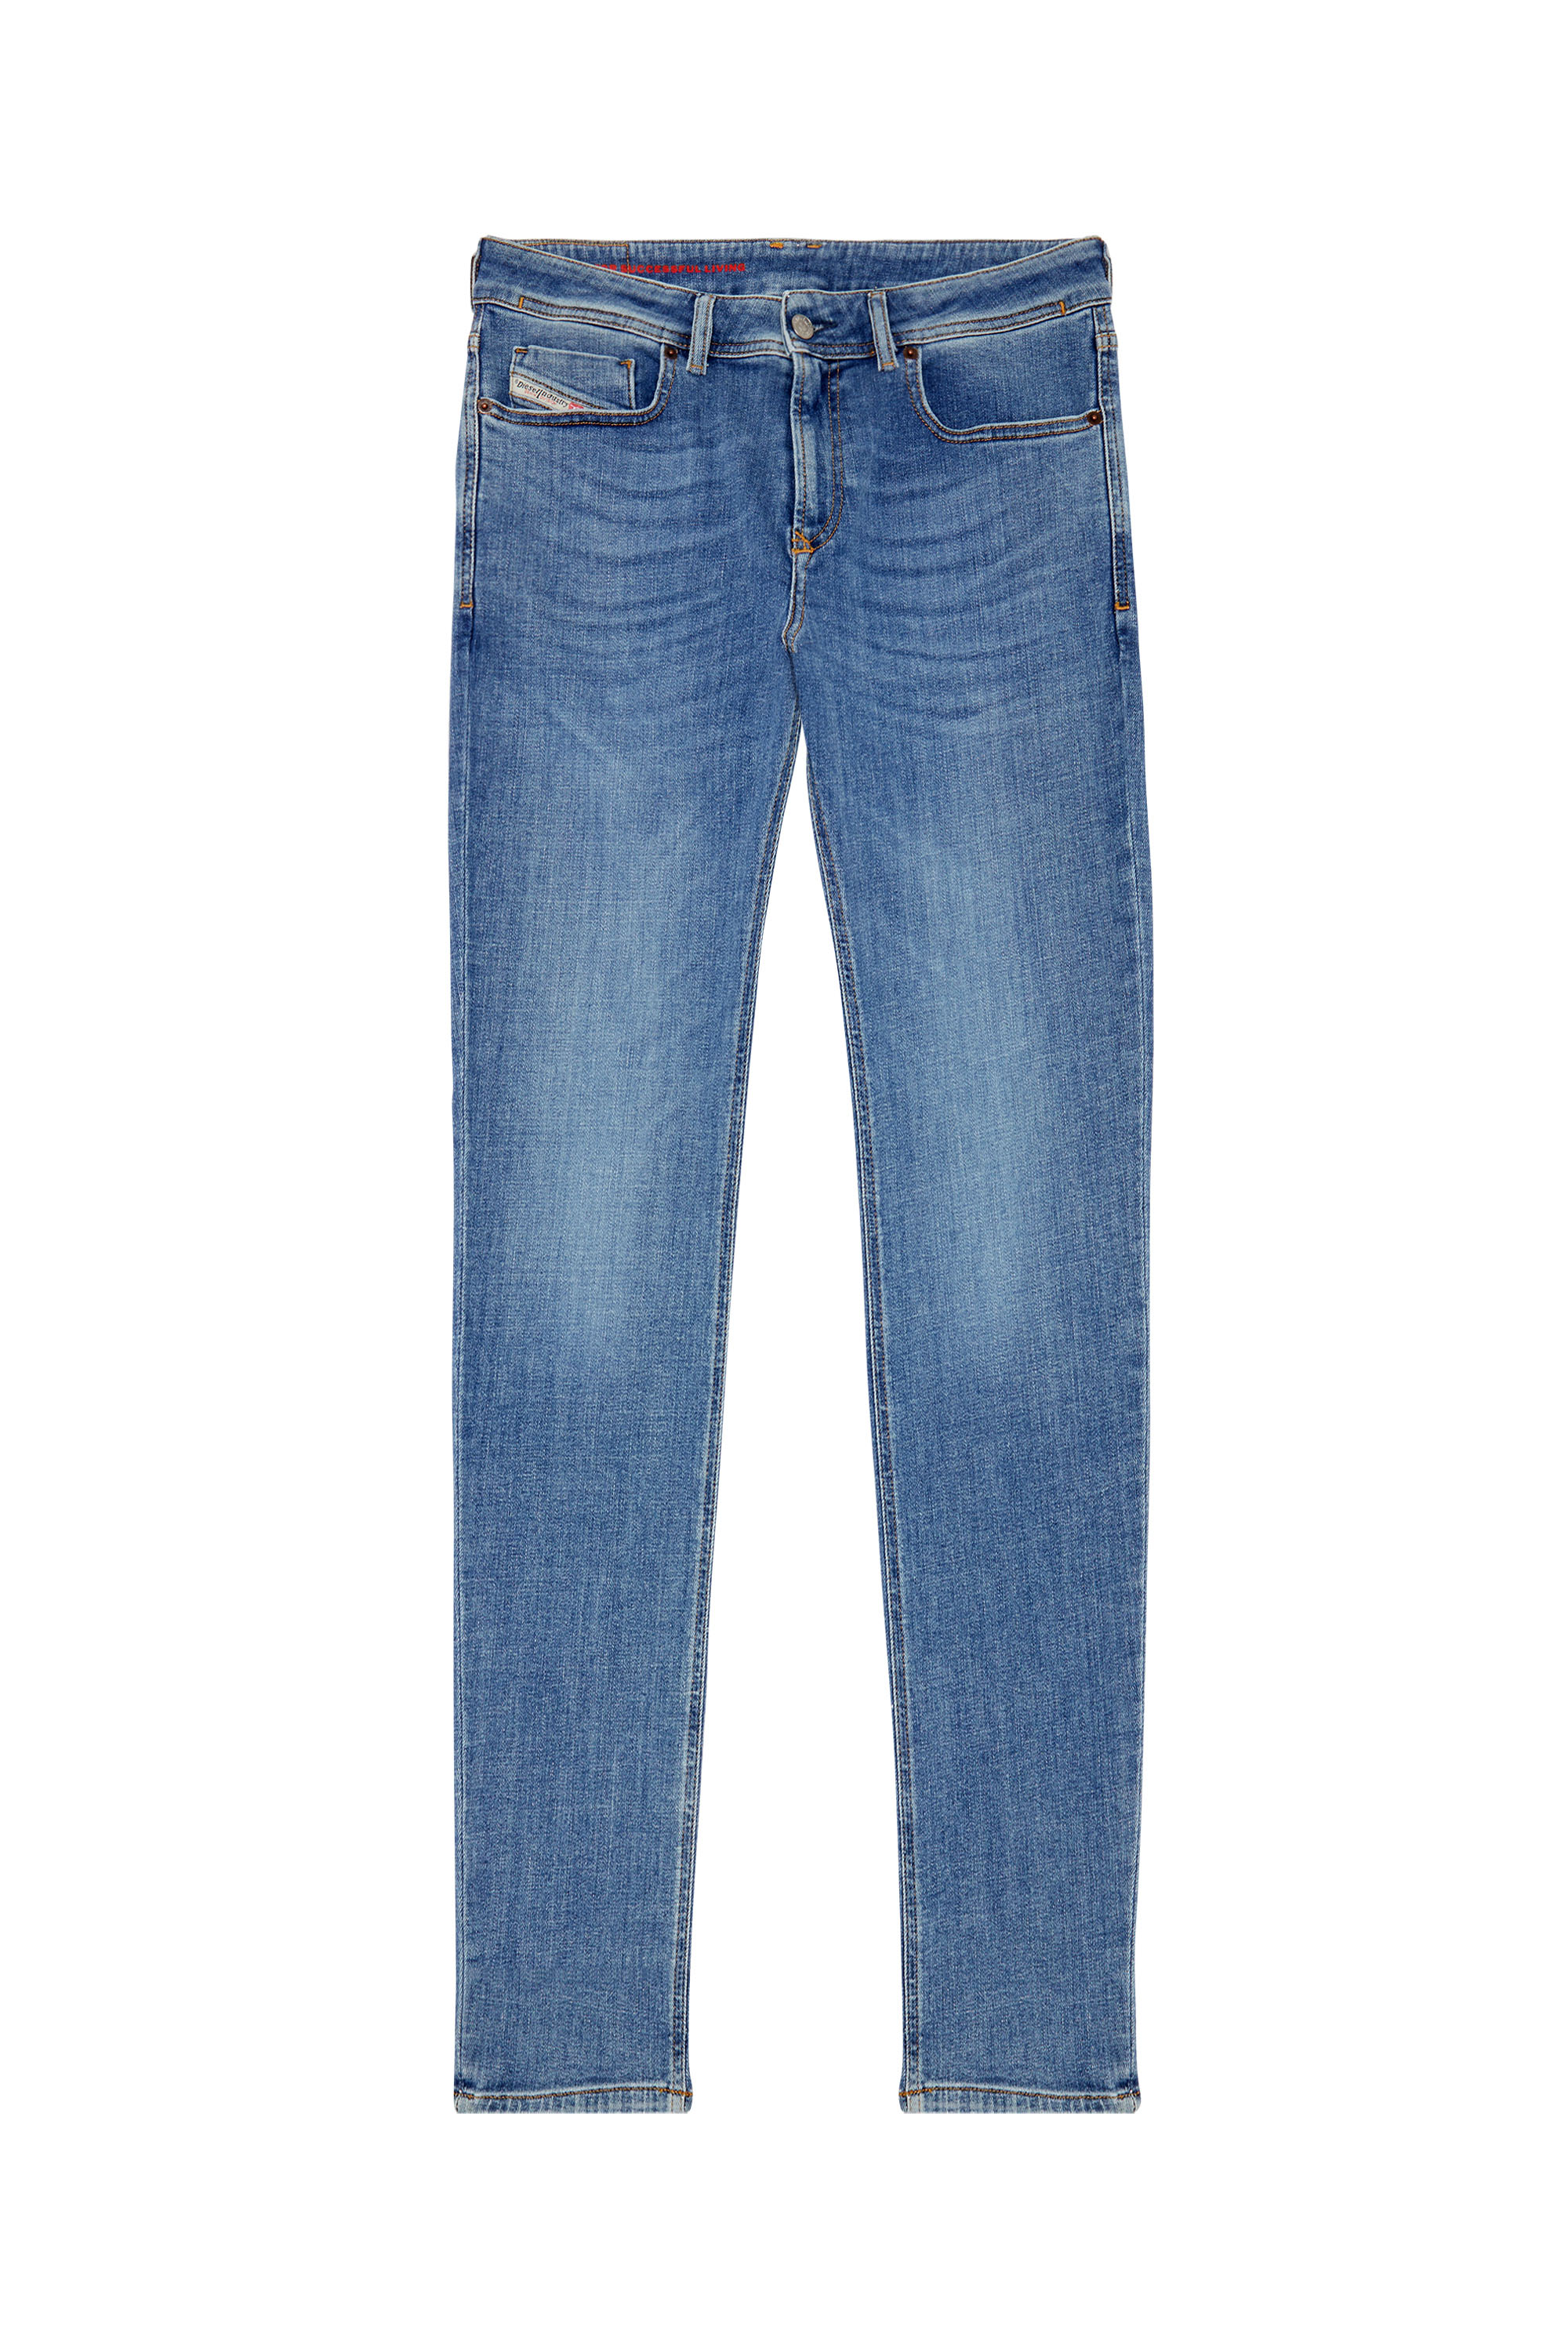 1979 Sleenker 09C01 Skinny Jeans, Medium blue